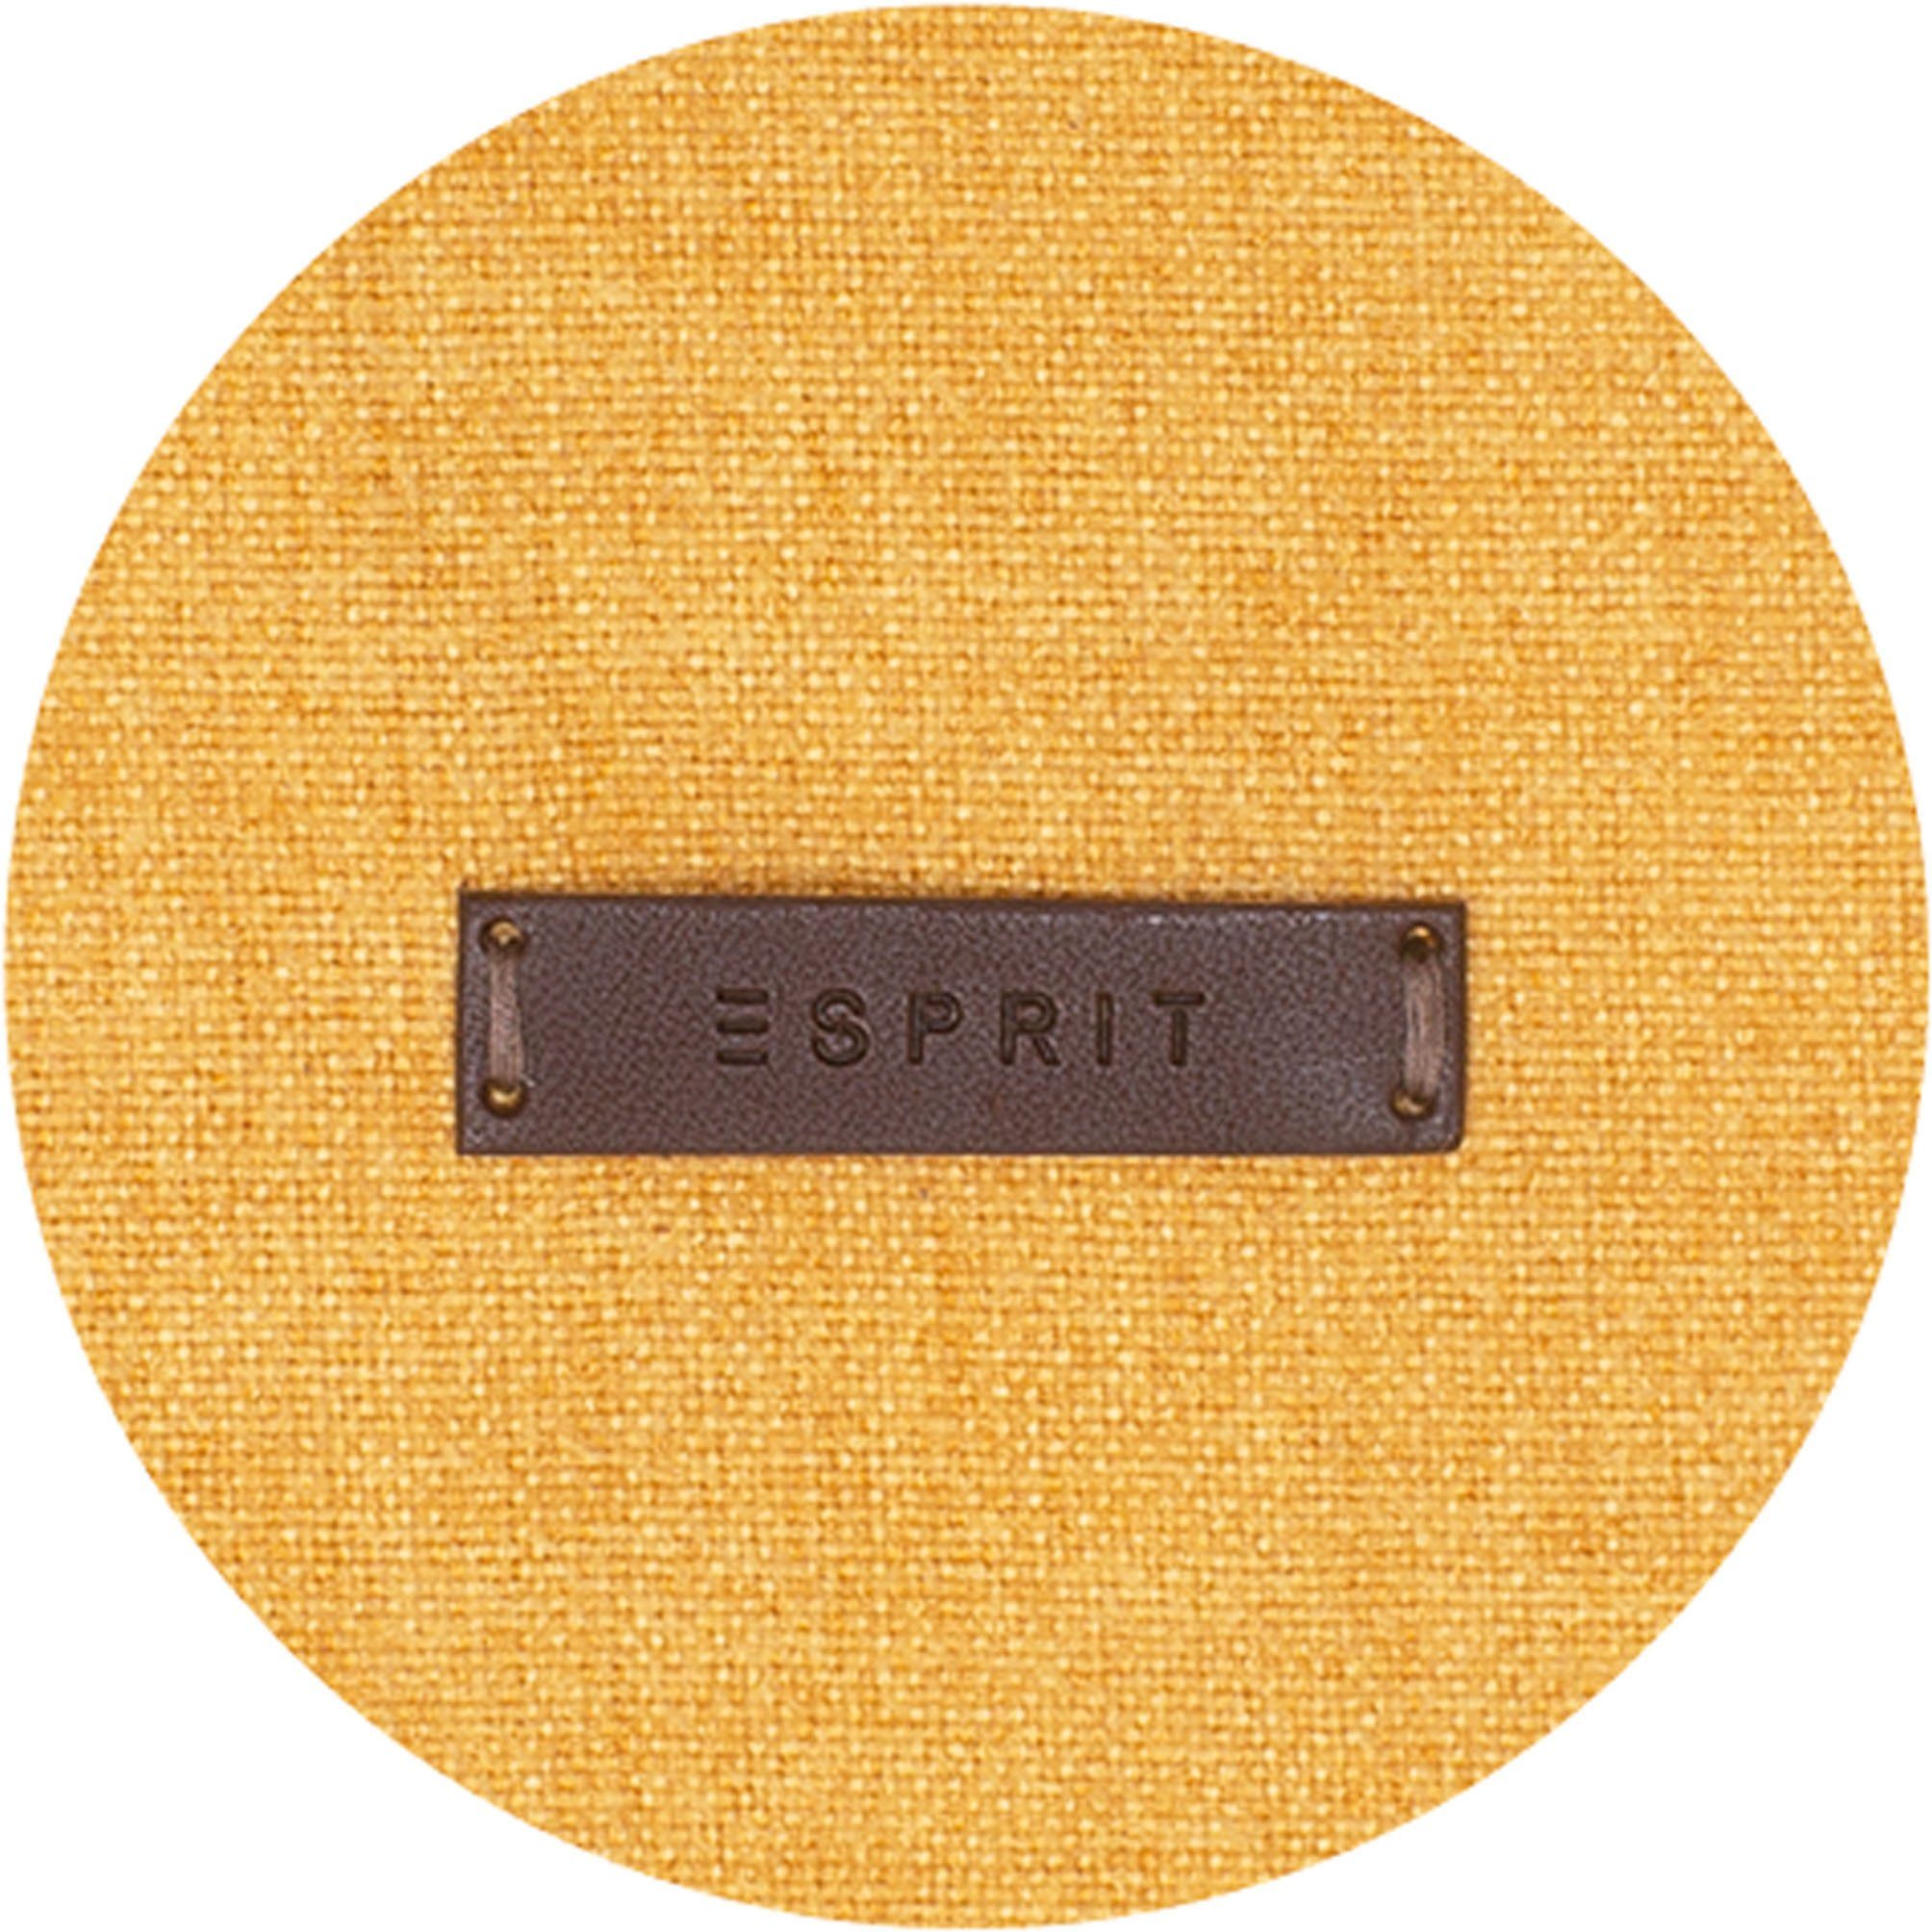 Esprit, Look (1 im zeilosen, MUSTARD Vorhang unifarbenen Ösen Harp, Jacquard, blickdicht, St),